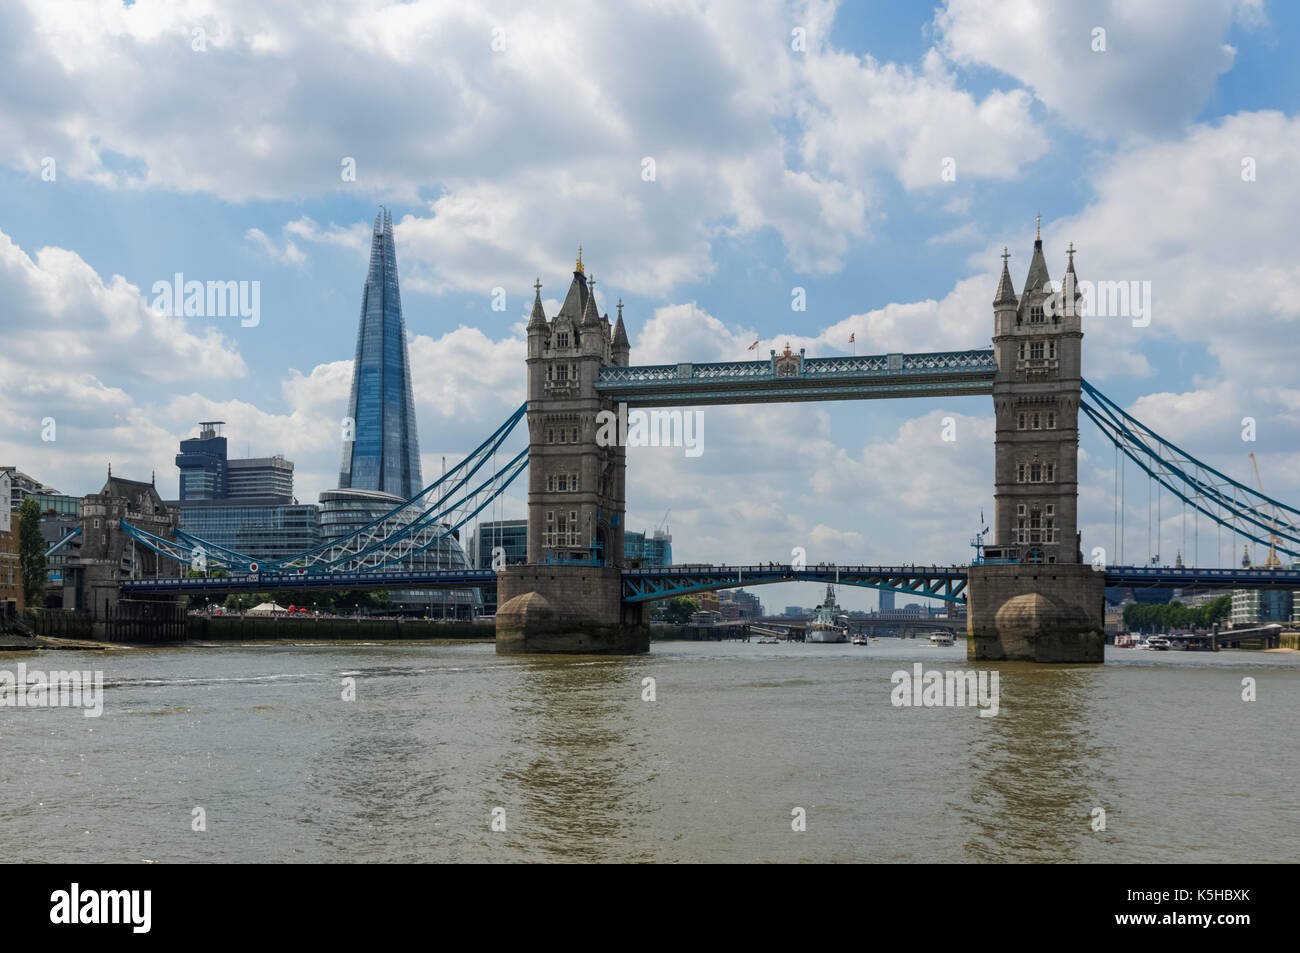 The Shard skyscraper and Tower Bridge in London, England, United Kingdom, UK Stock Photo